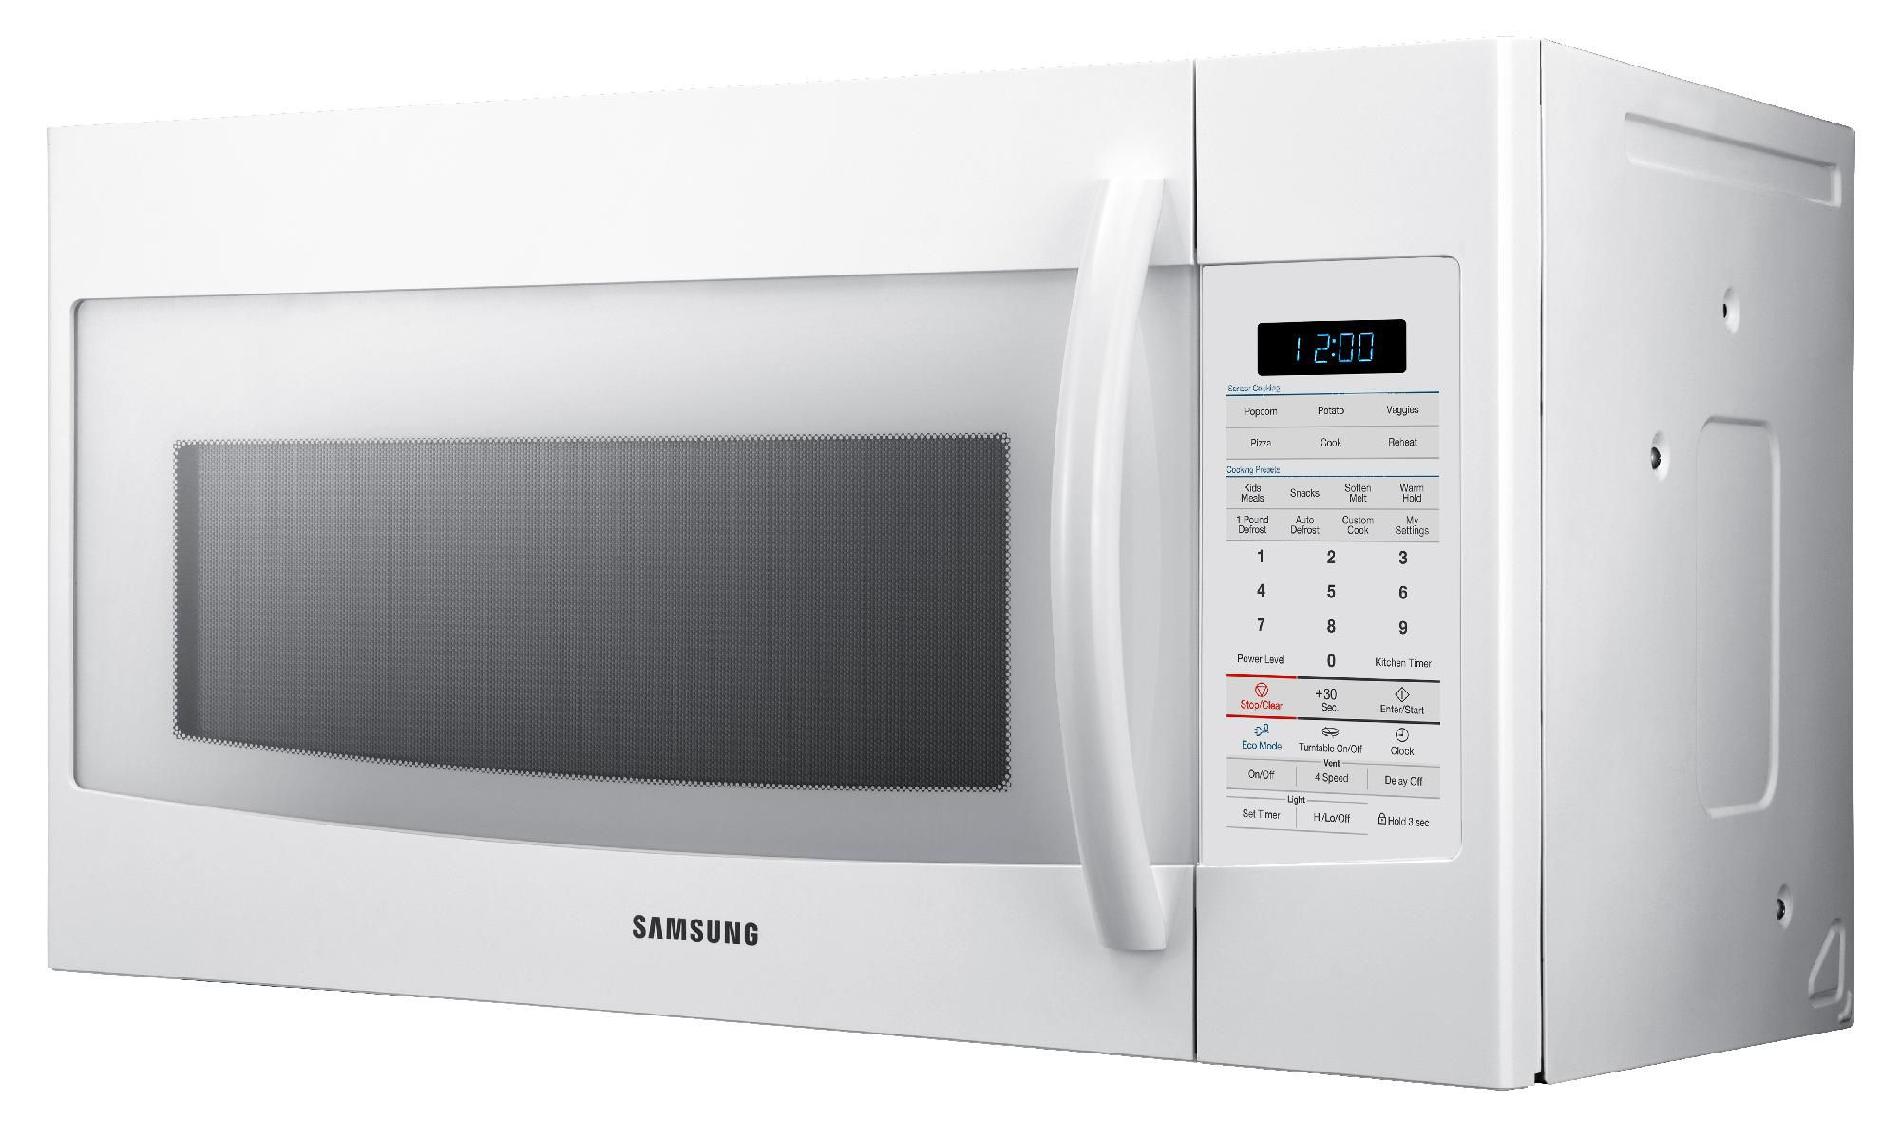 Samsung SMH1816W 30" Over the Range Microwave - White